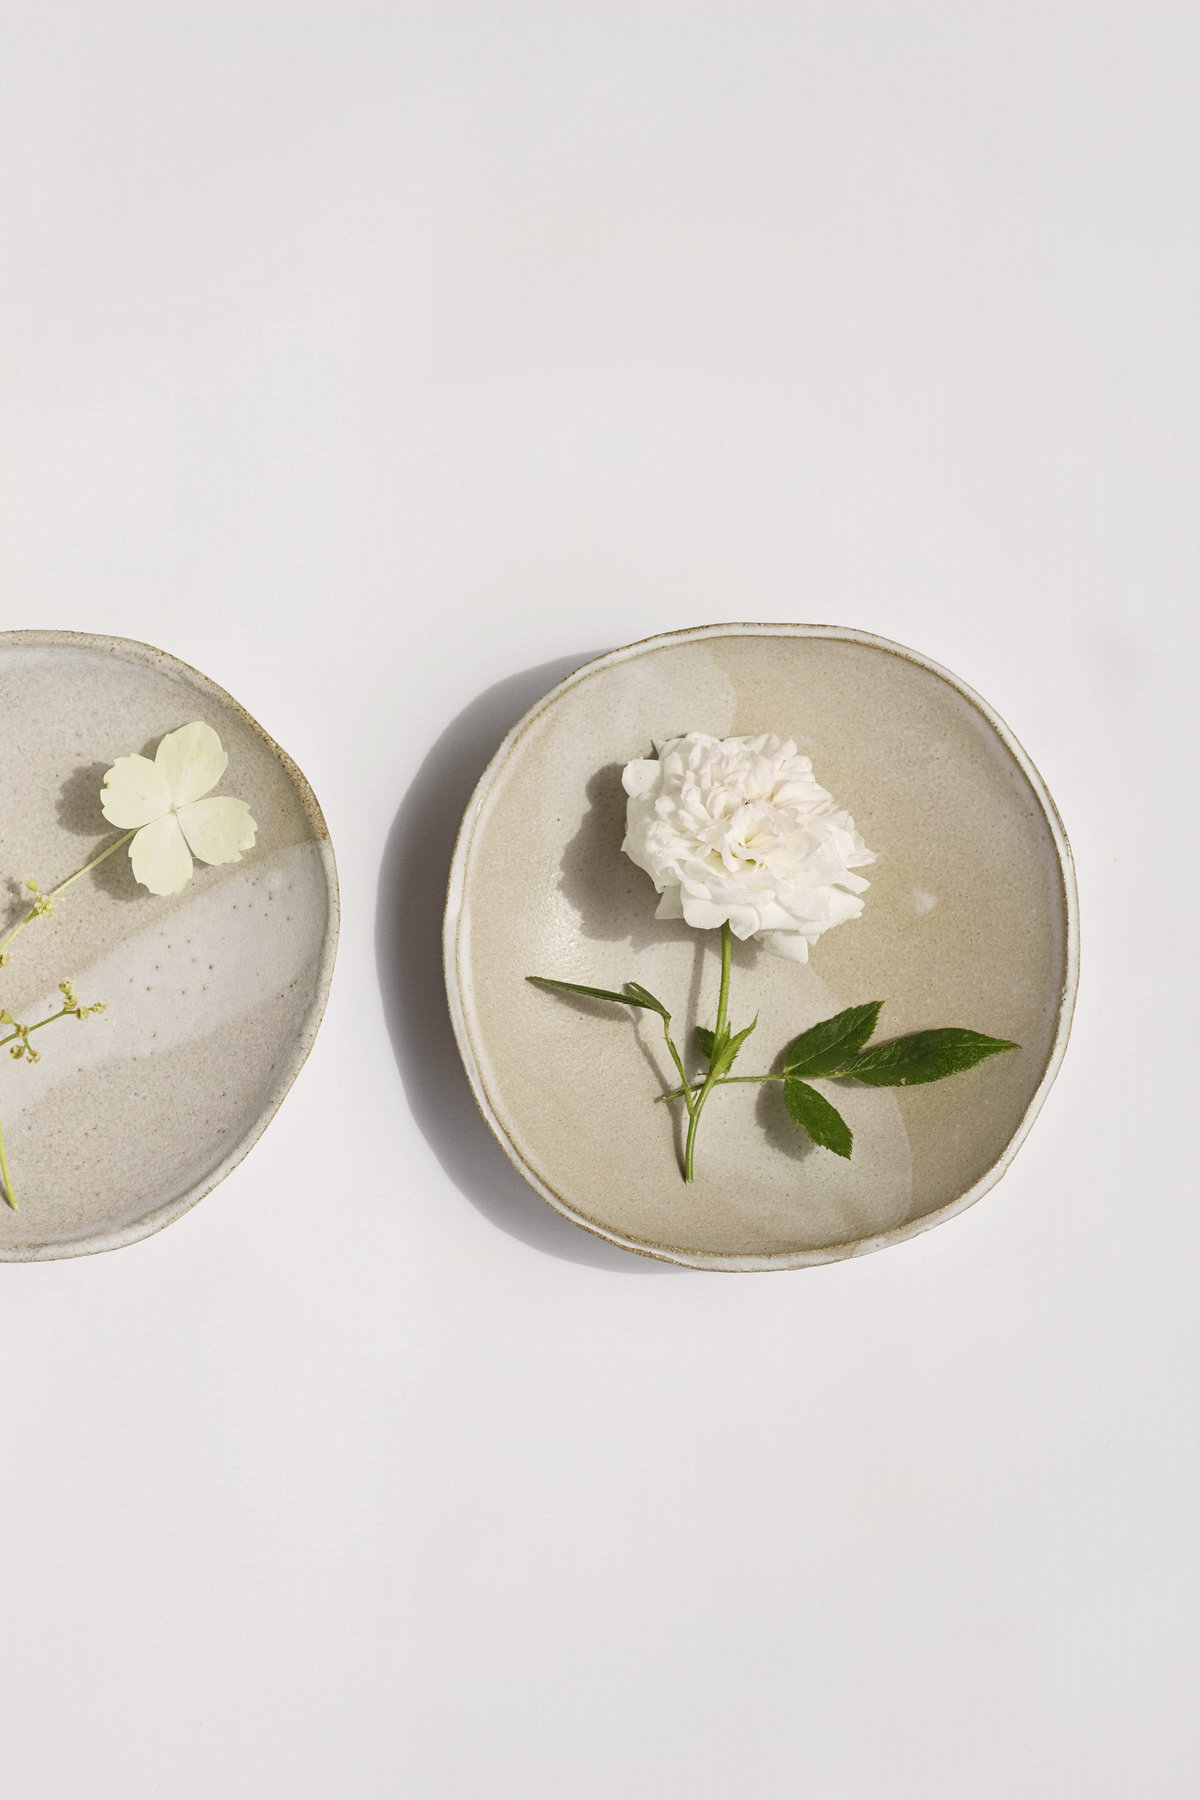 Yasha-Butler-Ceramics-Tableware-Plate-White-9-3500px